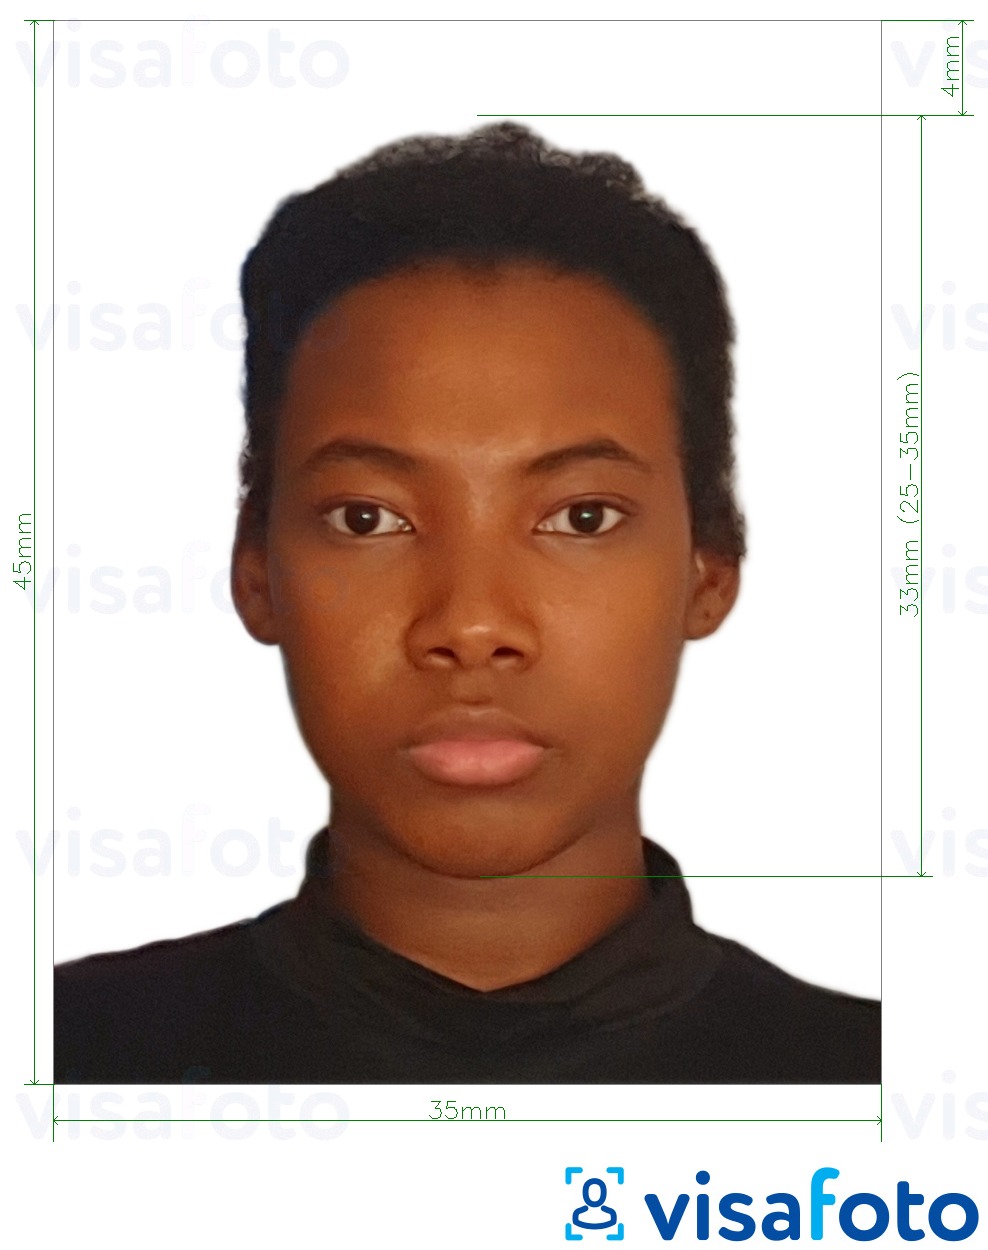 Contoh dari foto untuk Paspor Jamaika 35x45 mm (3,5x4,5 cm) dengan ukuran spesifikasi yang tepat